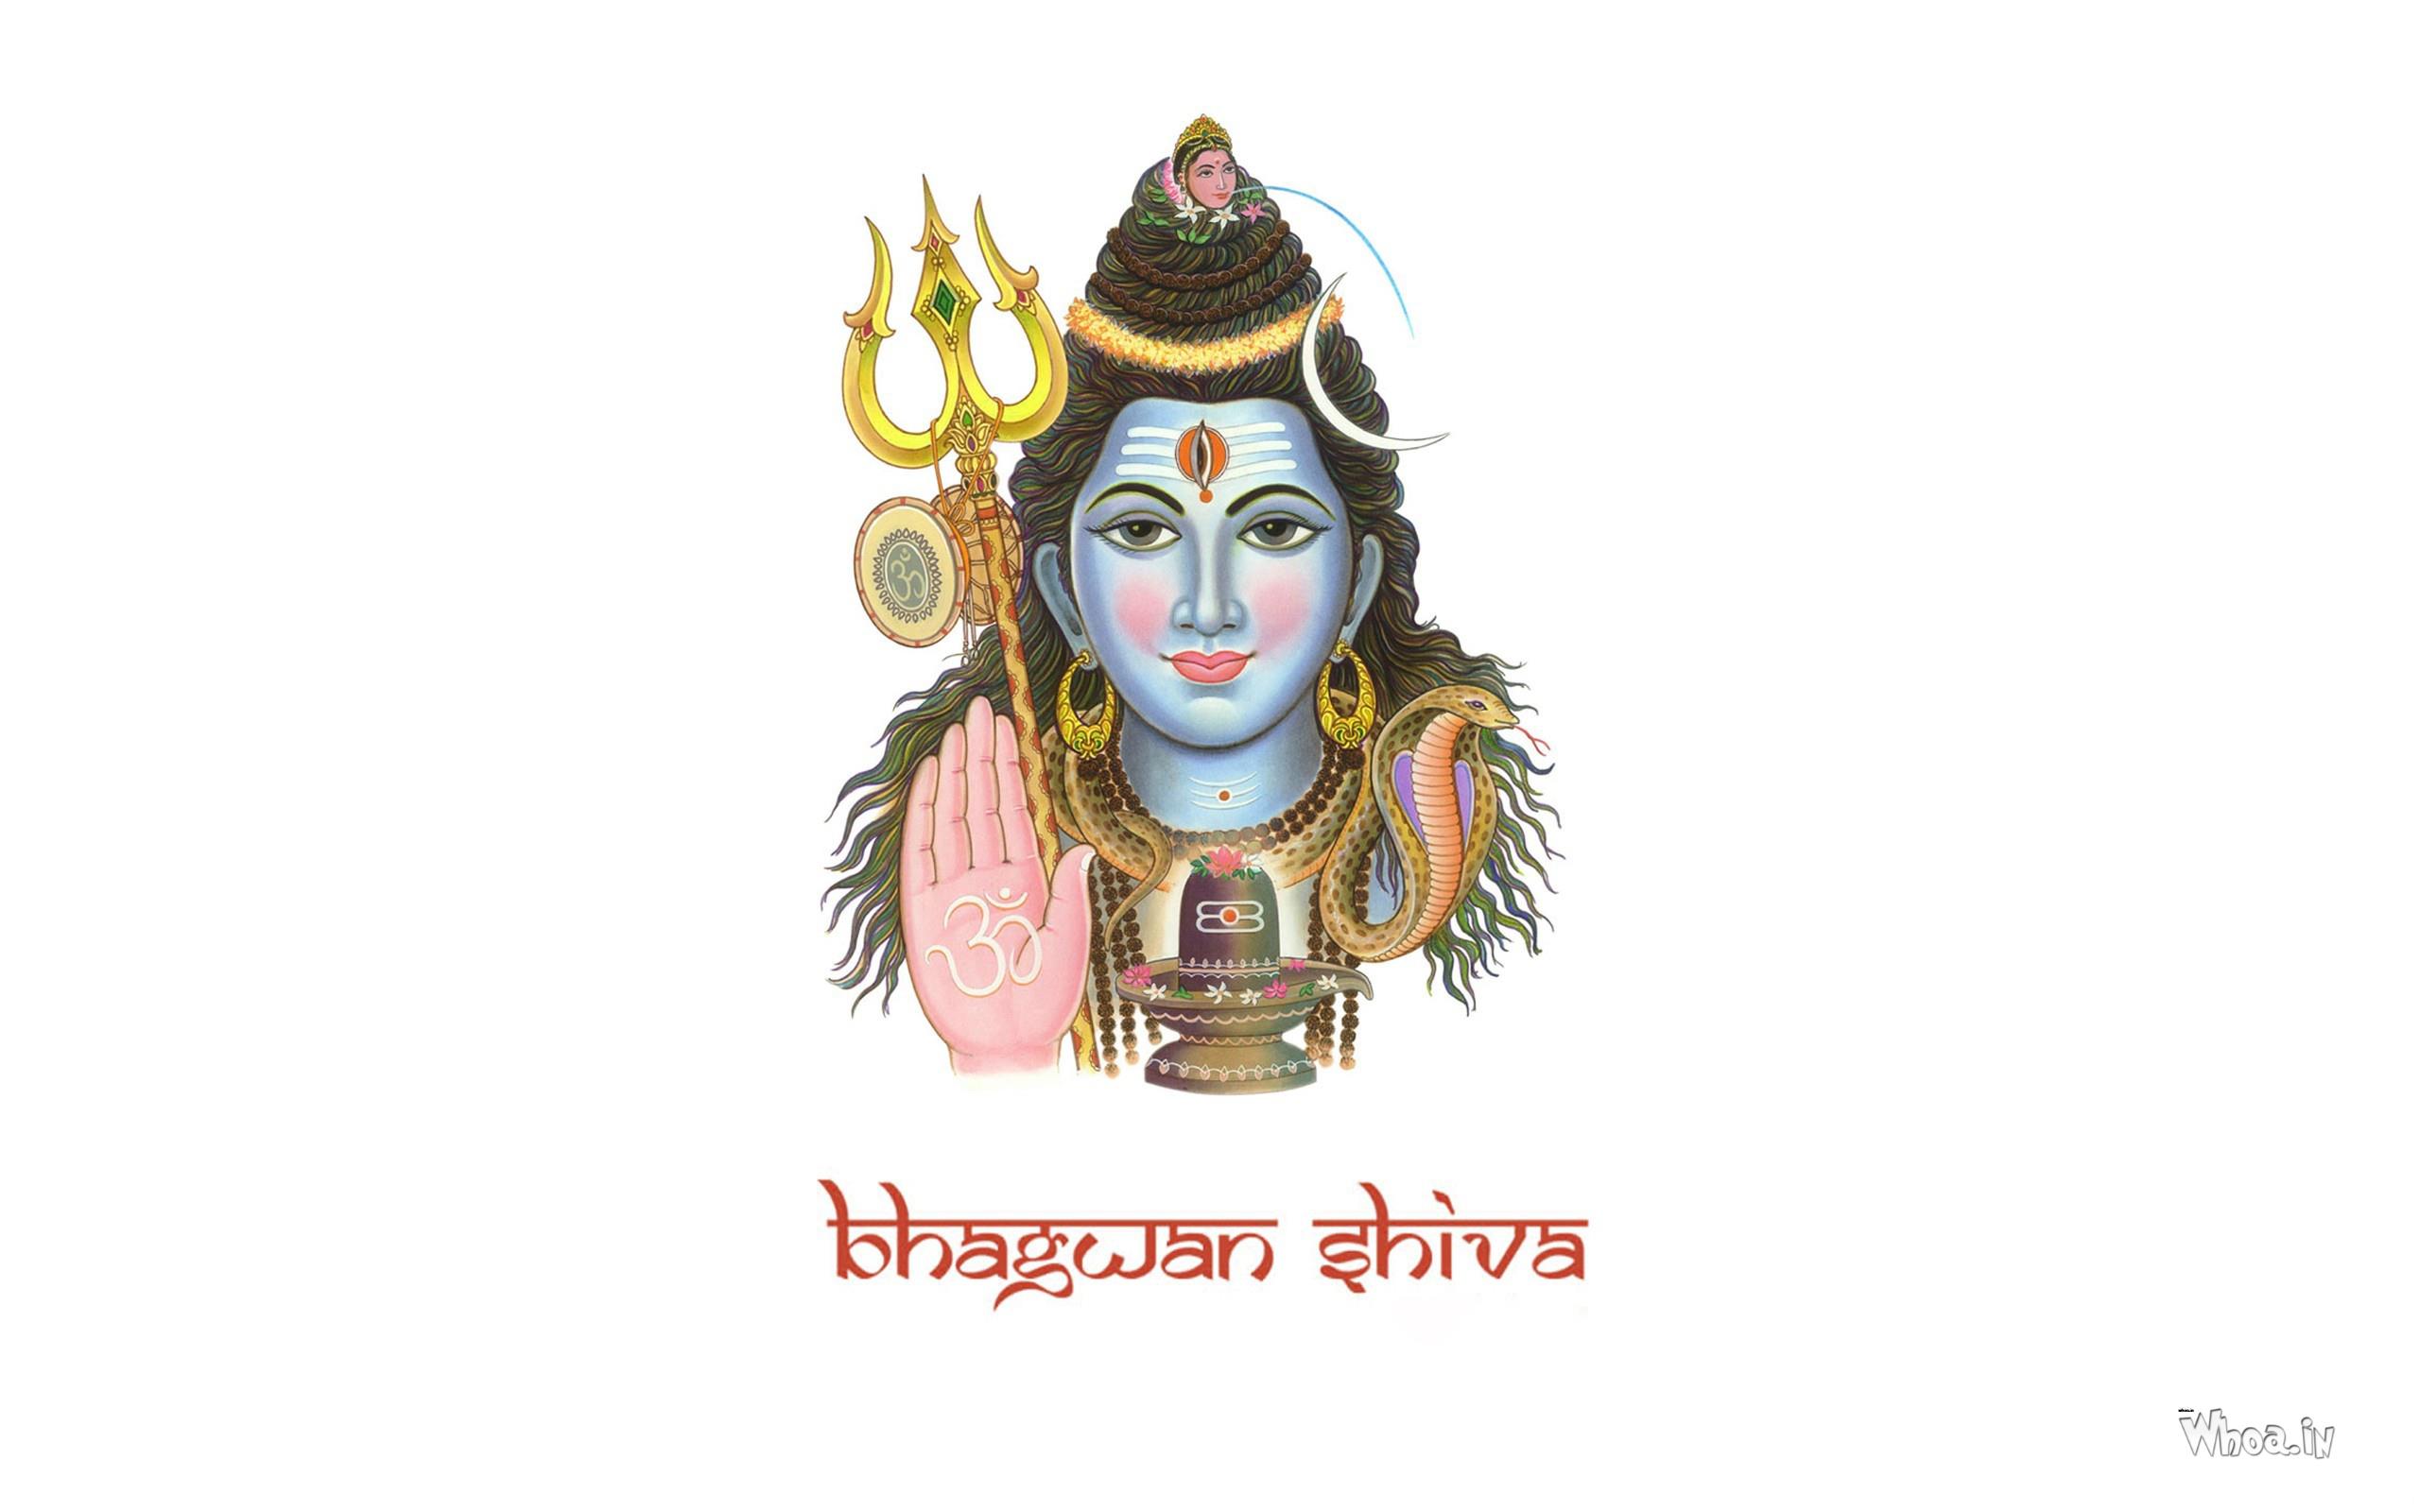 Bhagwan Shiva HD Colourful Wallpaper